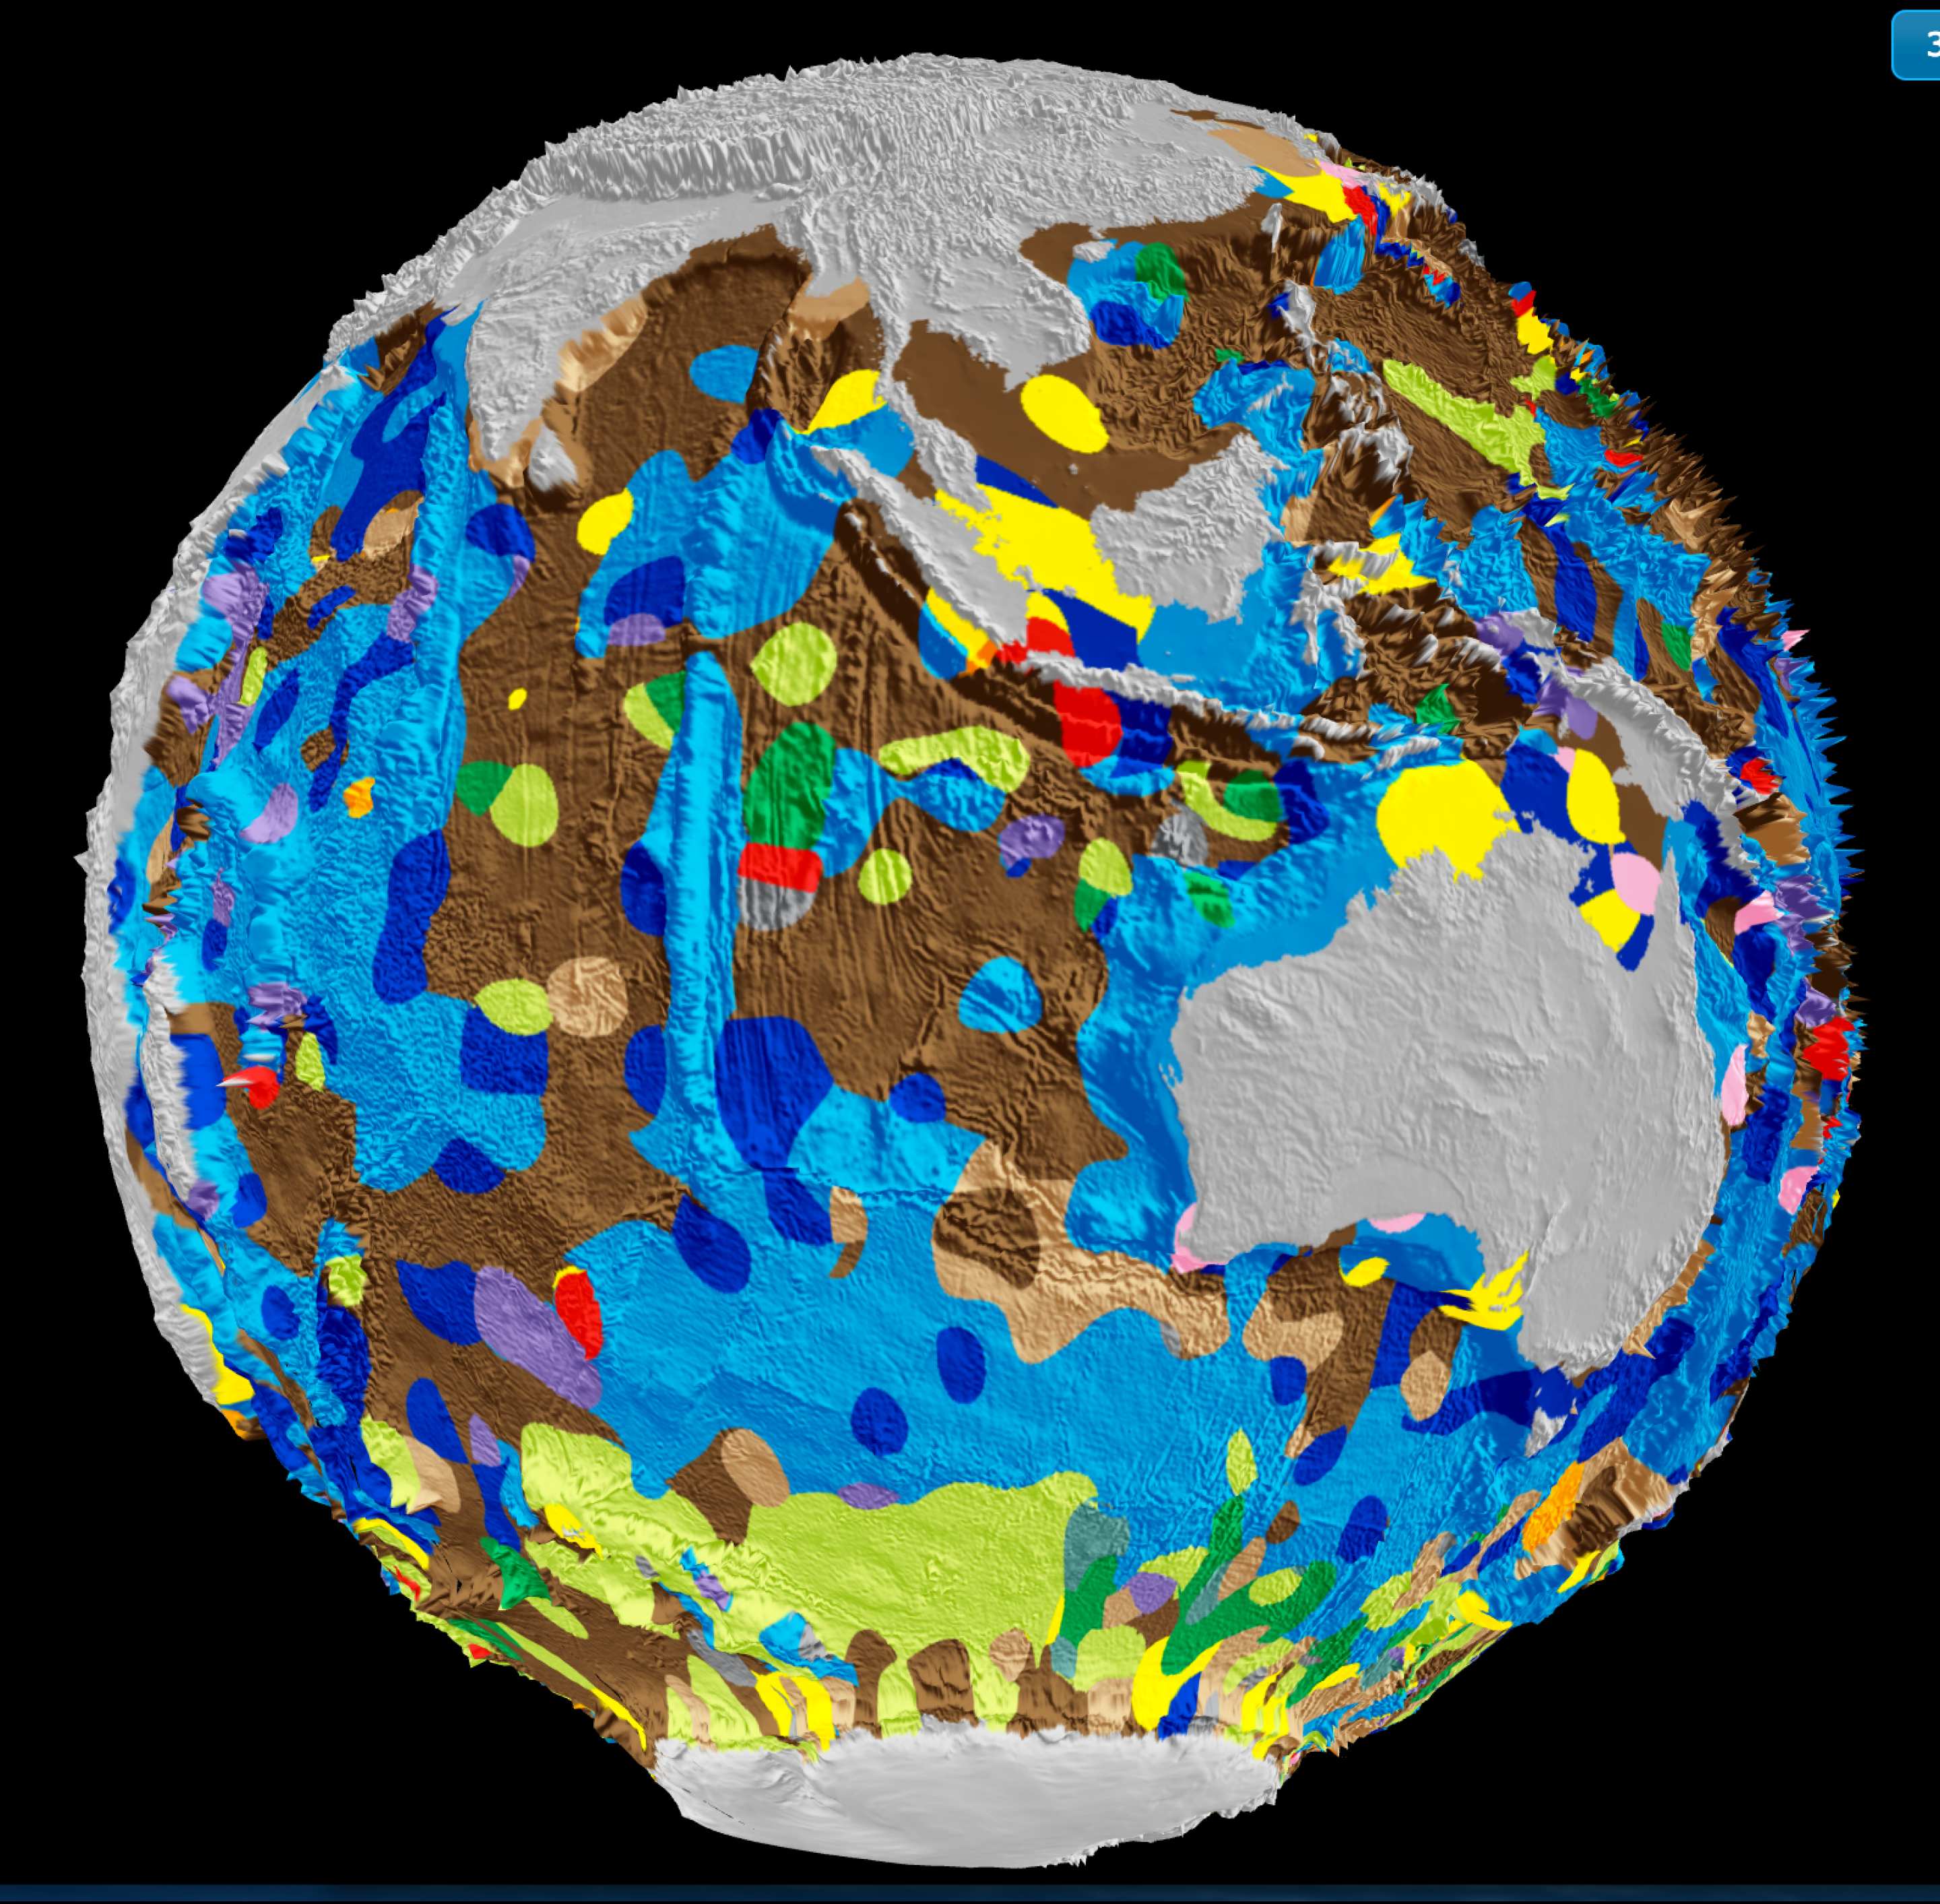 Big Data Maps World S Ocean Floor The University Of Sydney